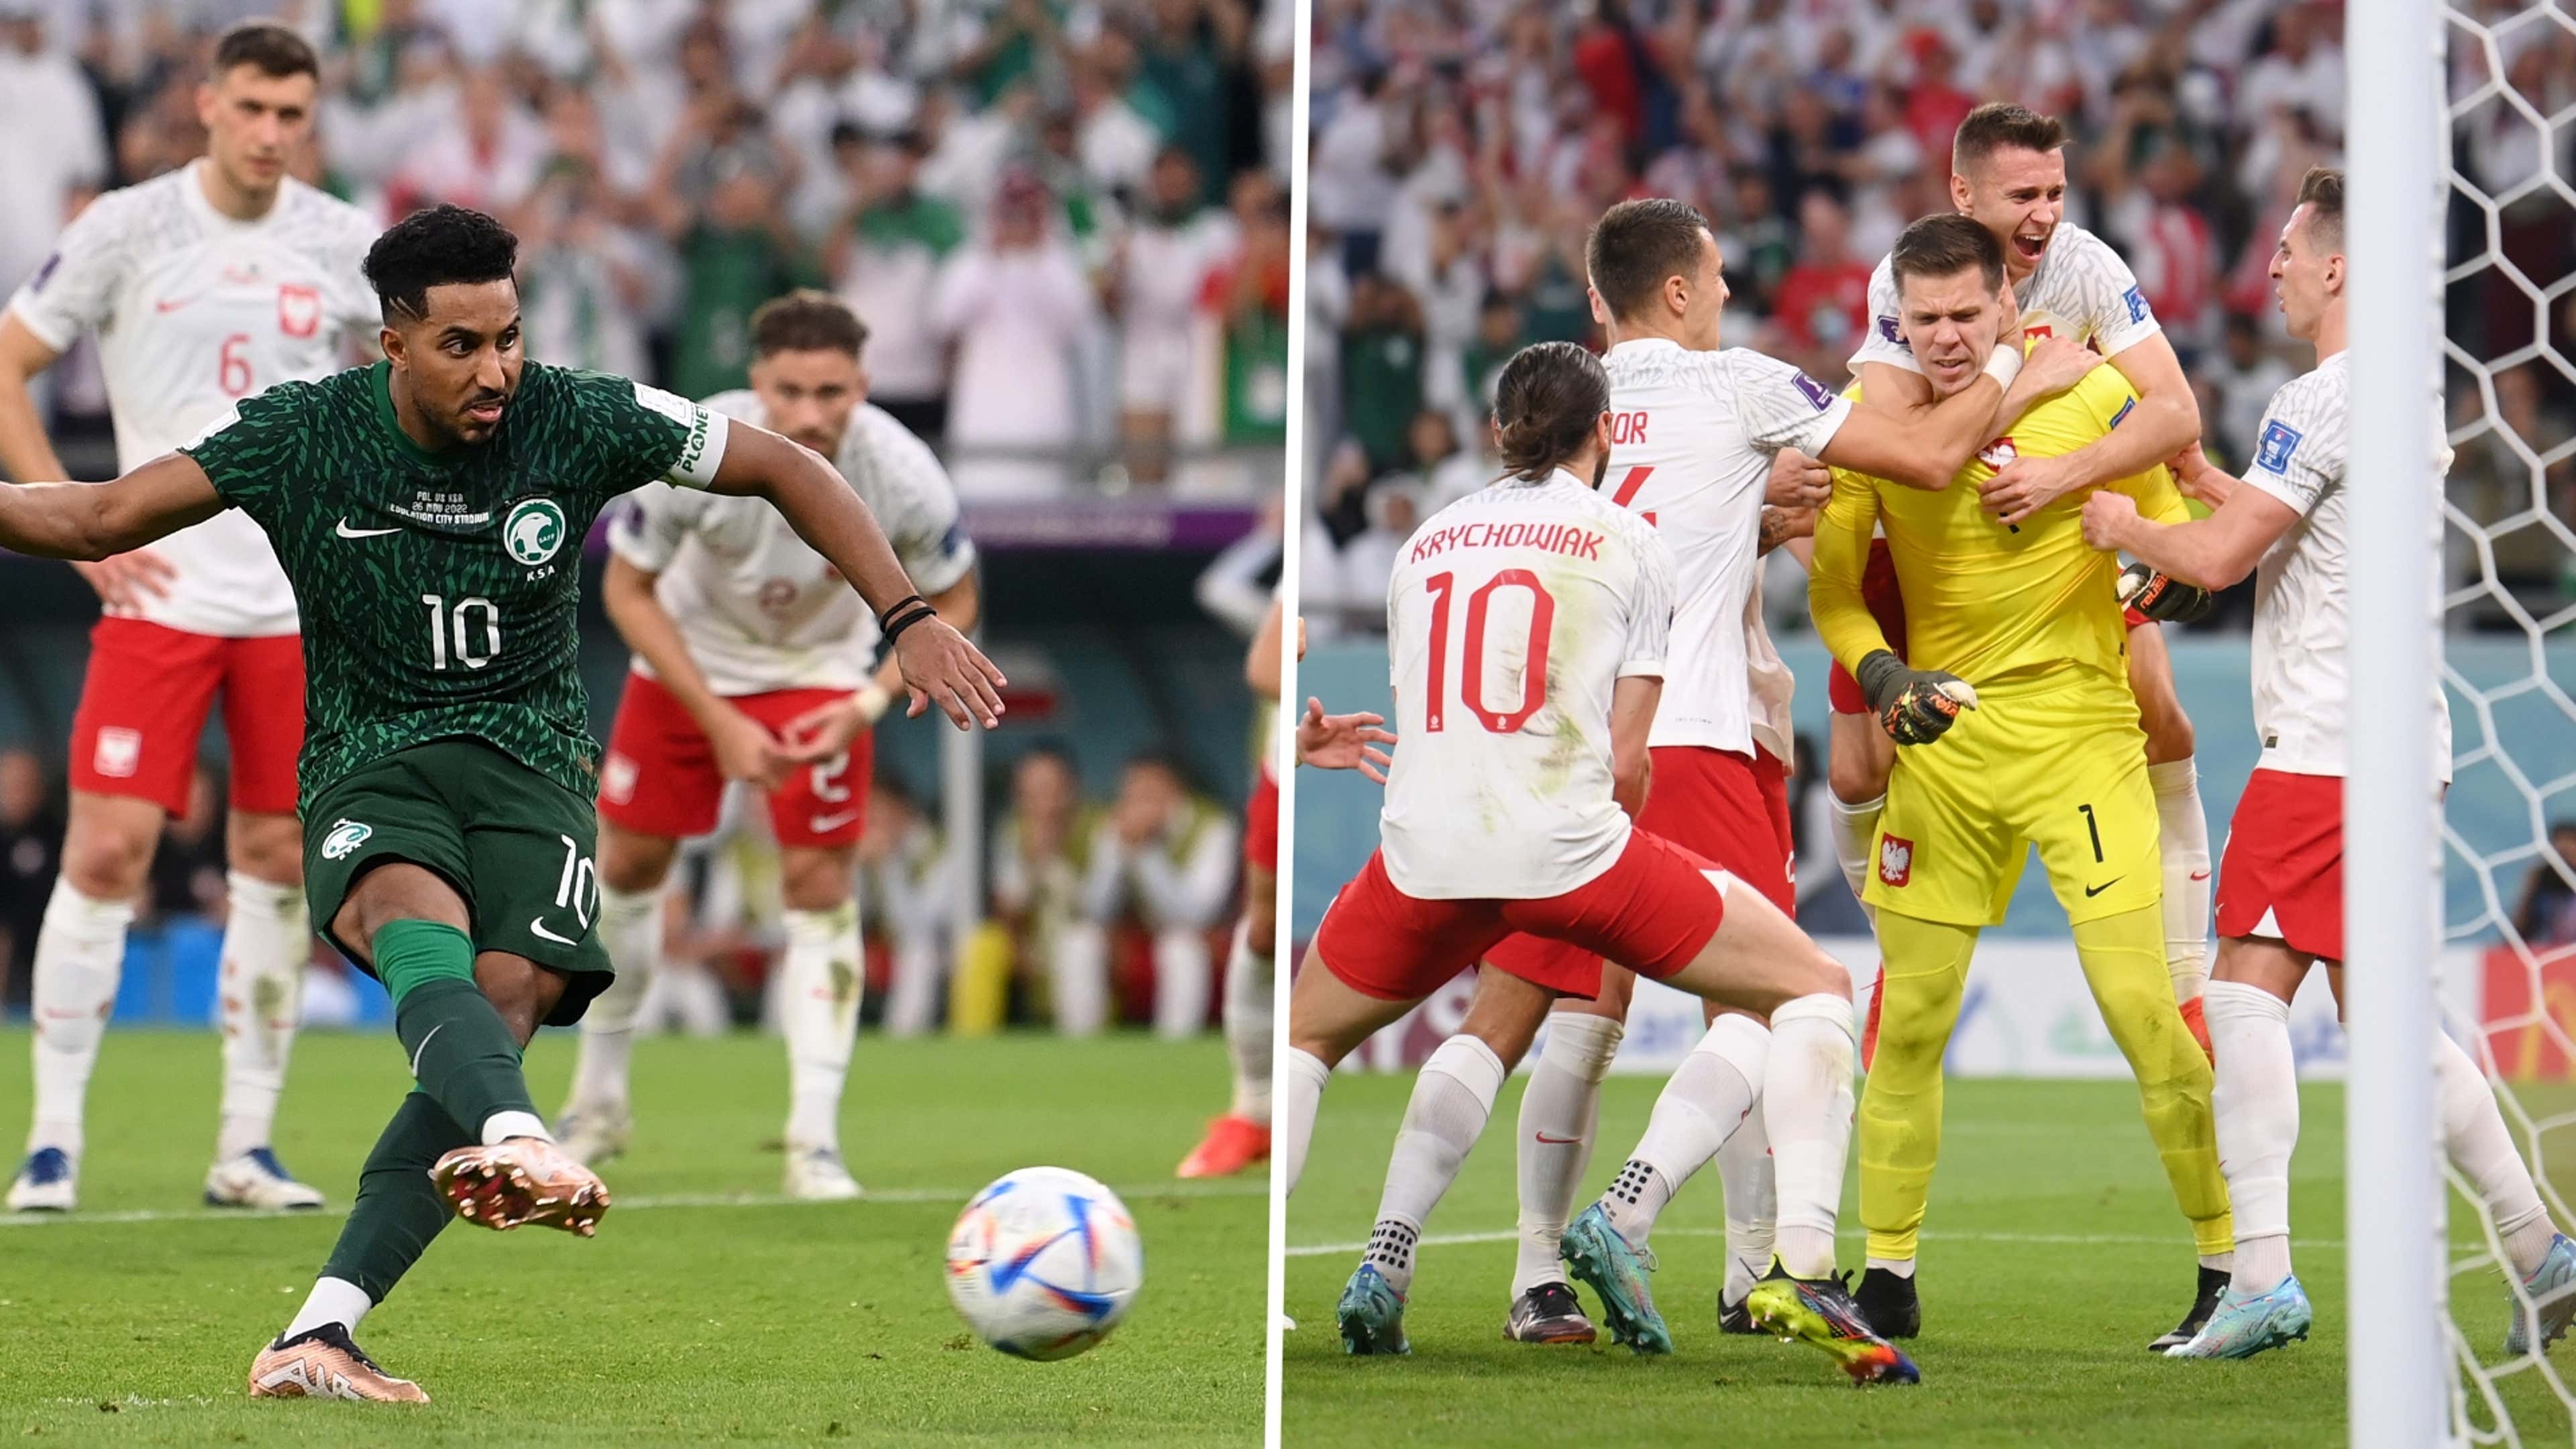 Copa 2022: mudança na regra ajudou Courtois a pegar pênalti; entenda